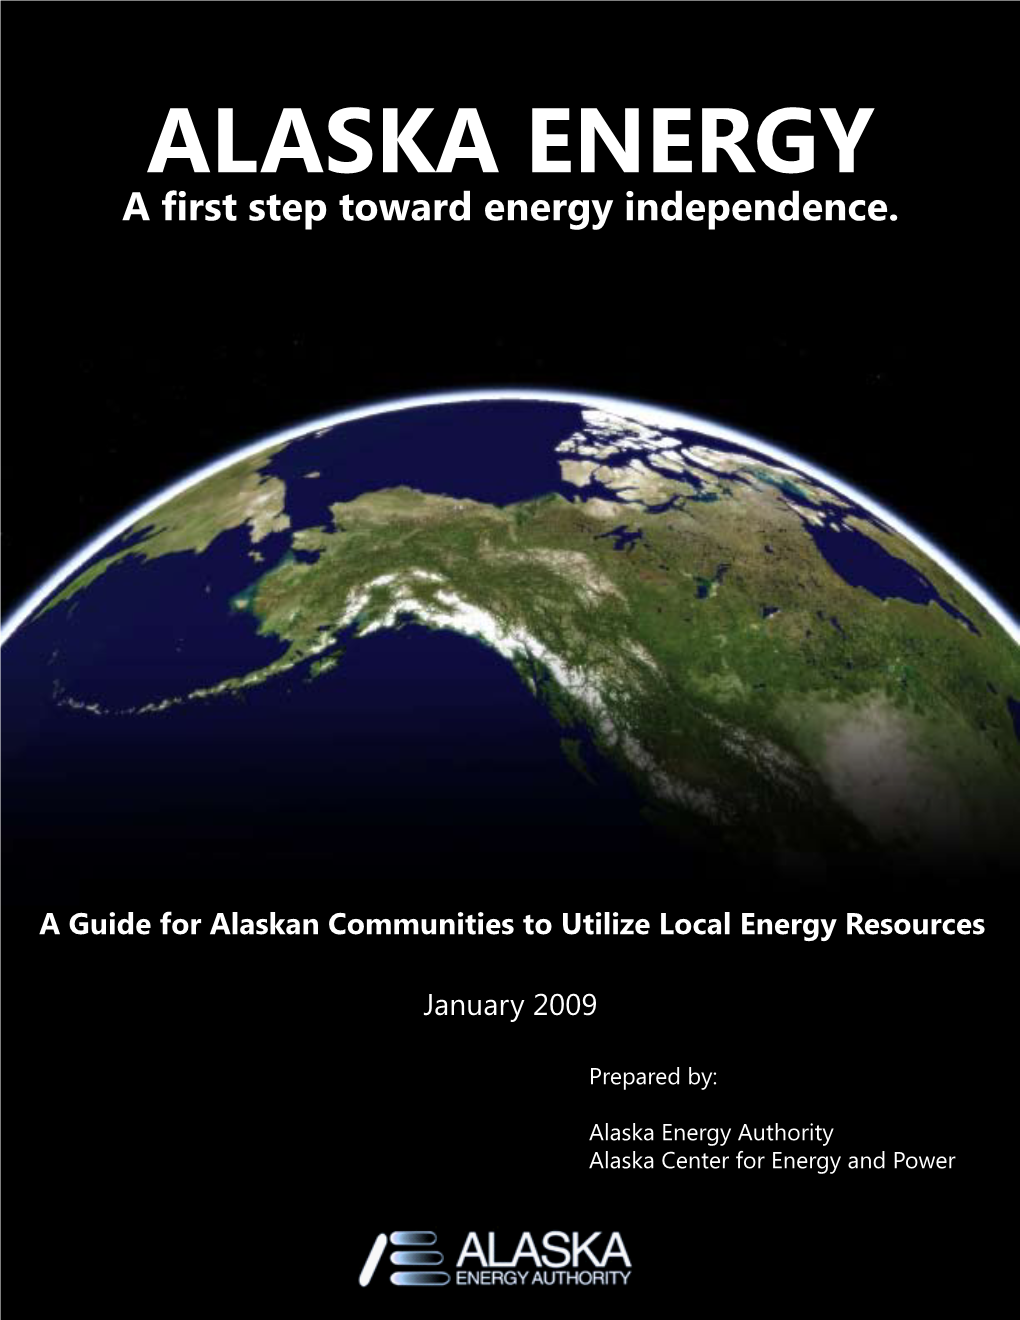 ALASKA ENERGY a First Step Toward Energy Independence